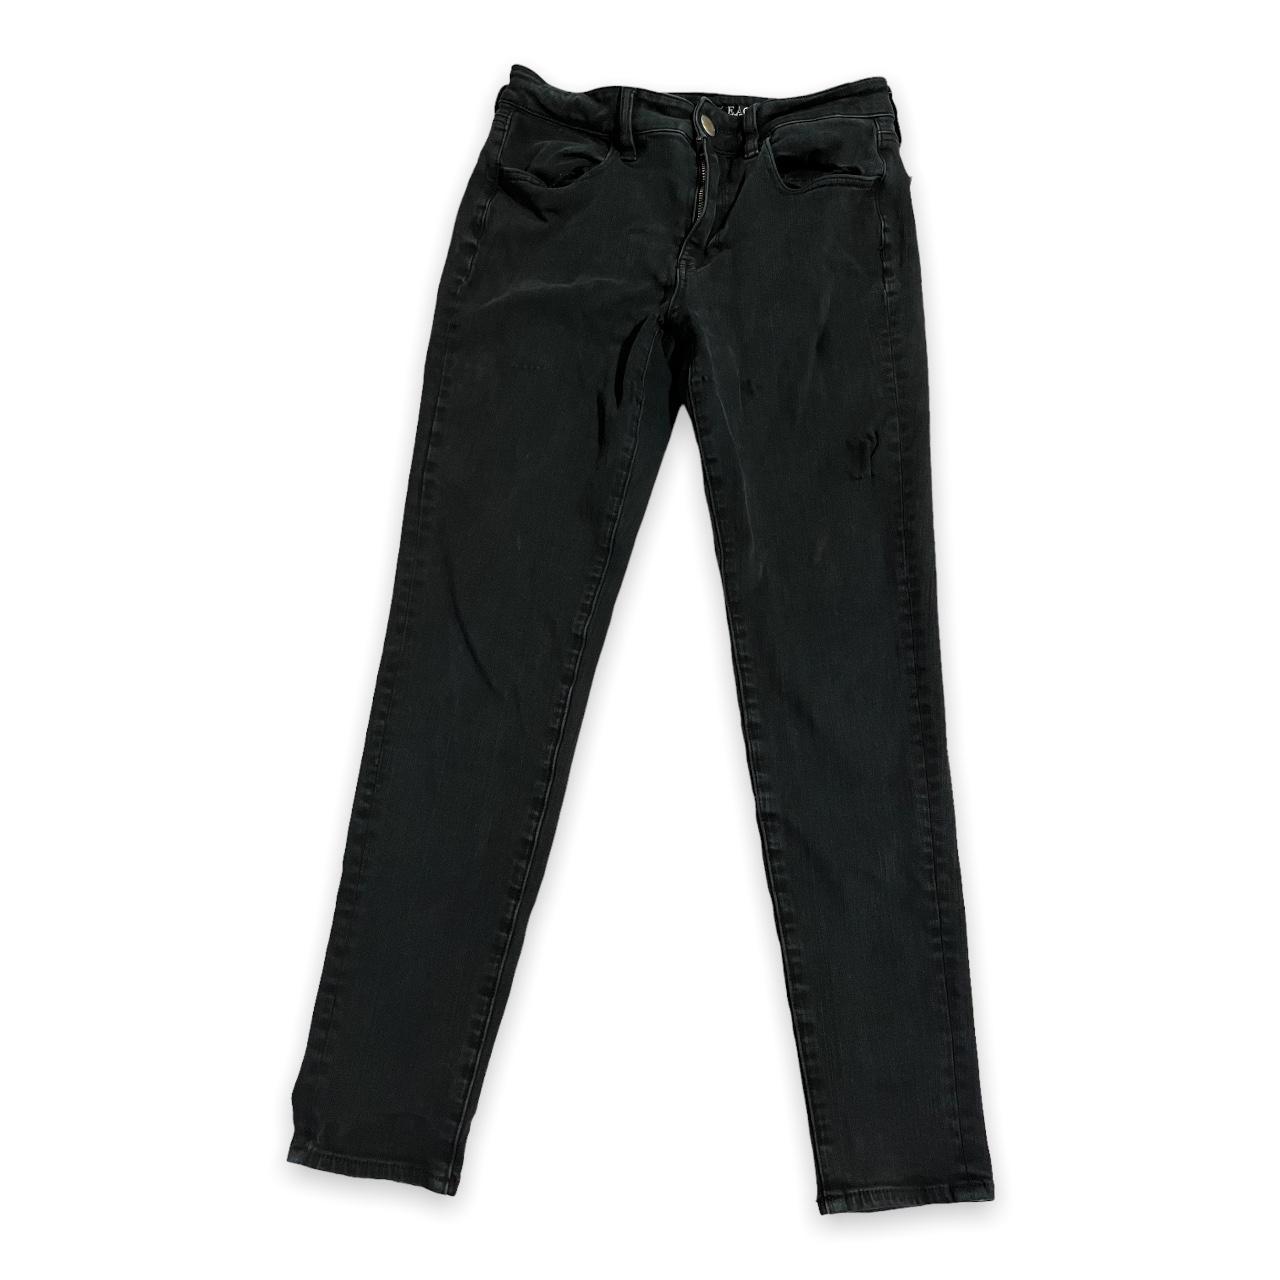 American Eagle Outfitters Women's Black Jeans | Depop